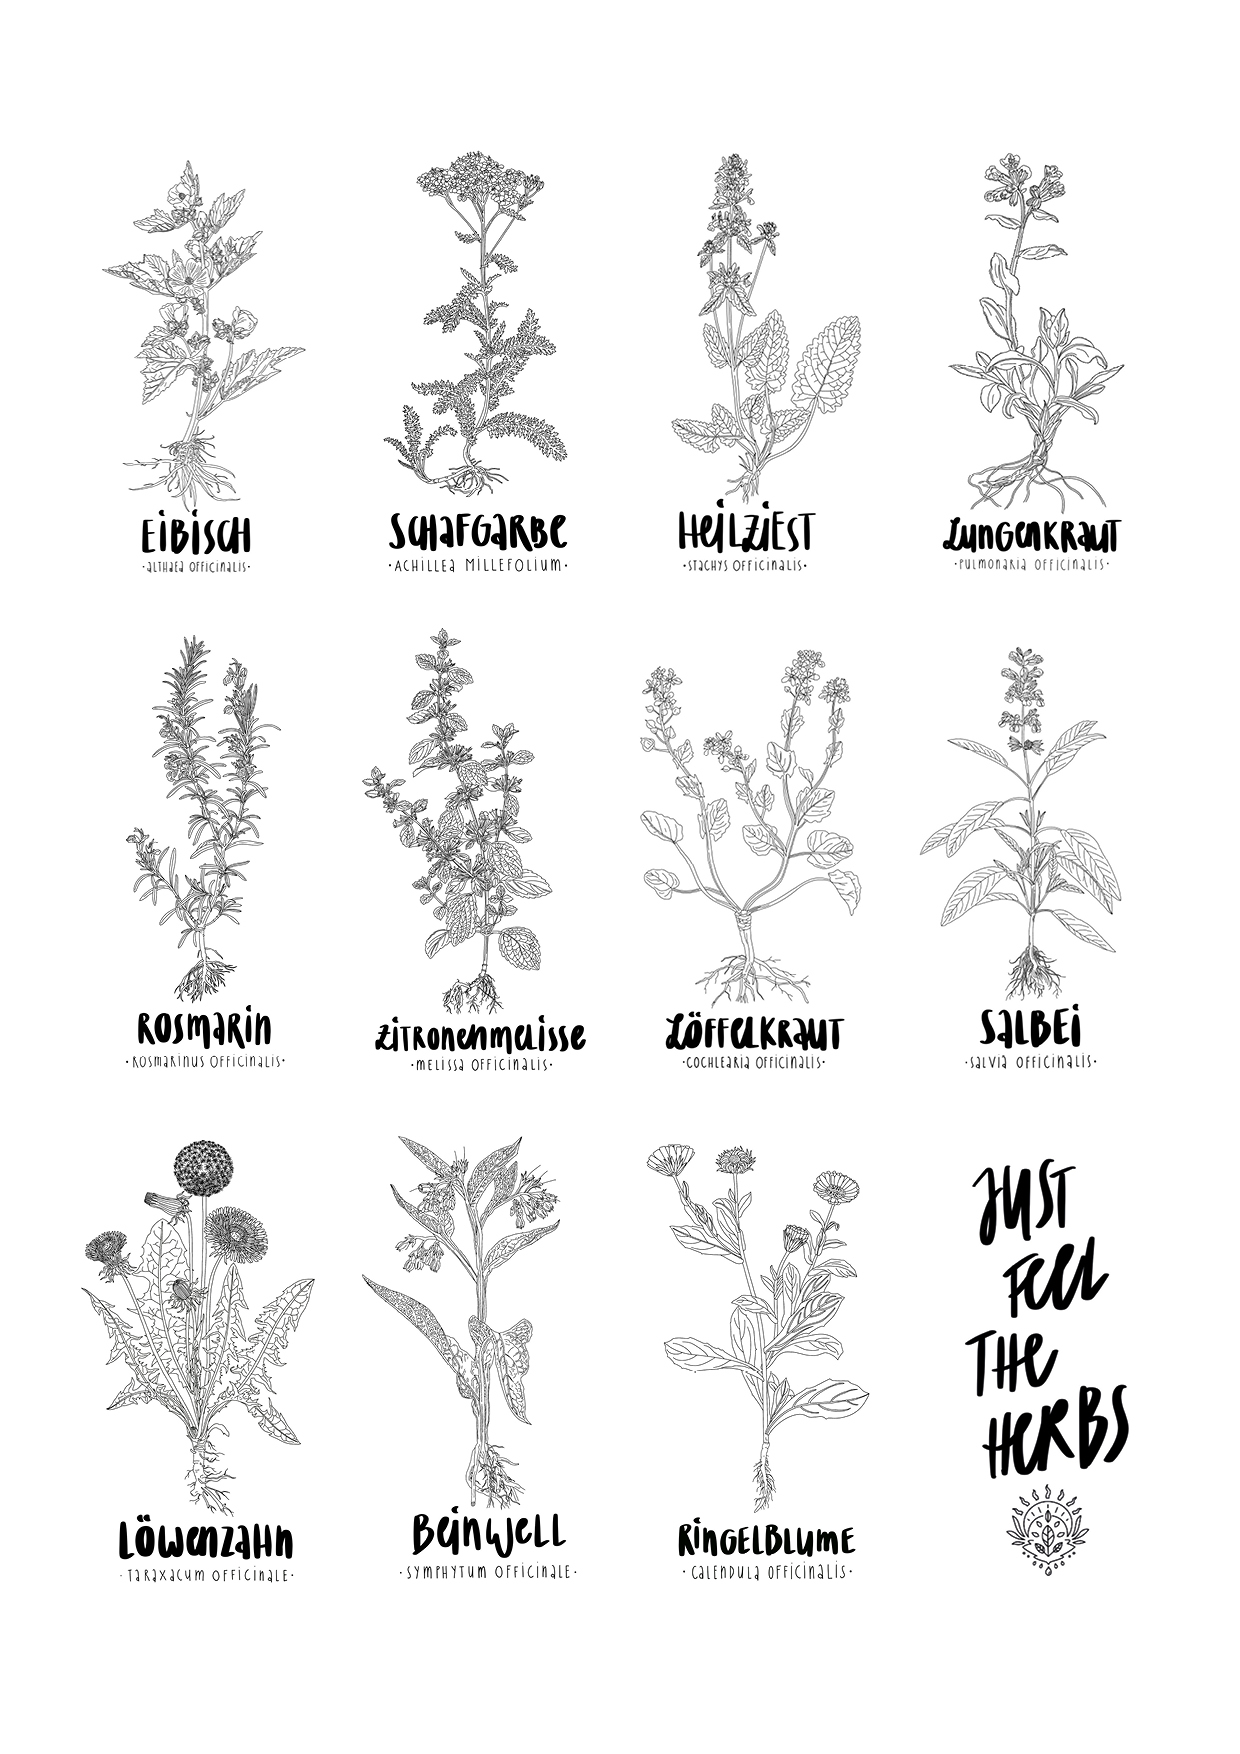 Imagebroschuere_Just-feel-the-herbs_Juli23